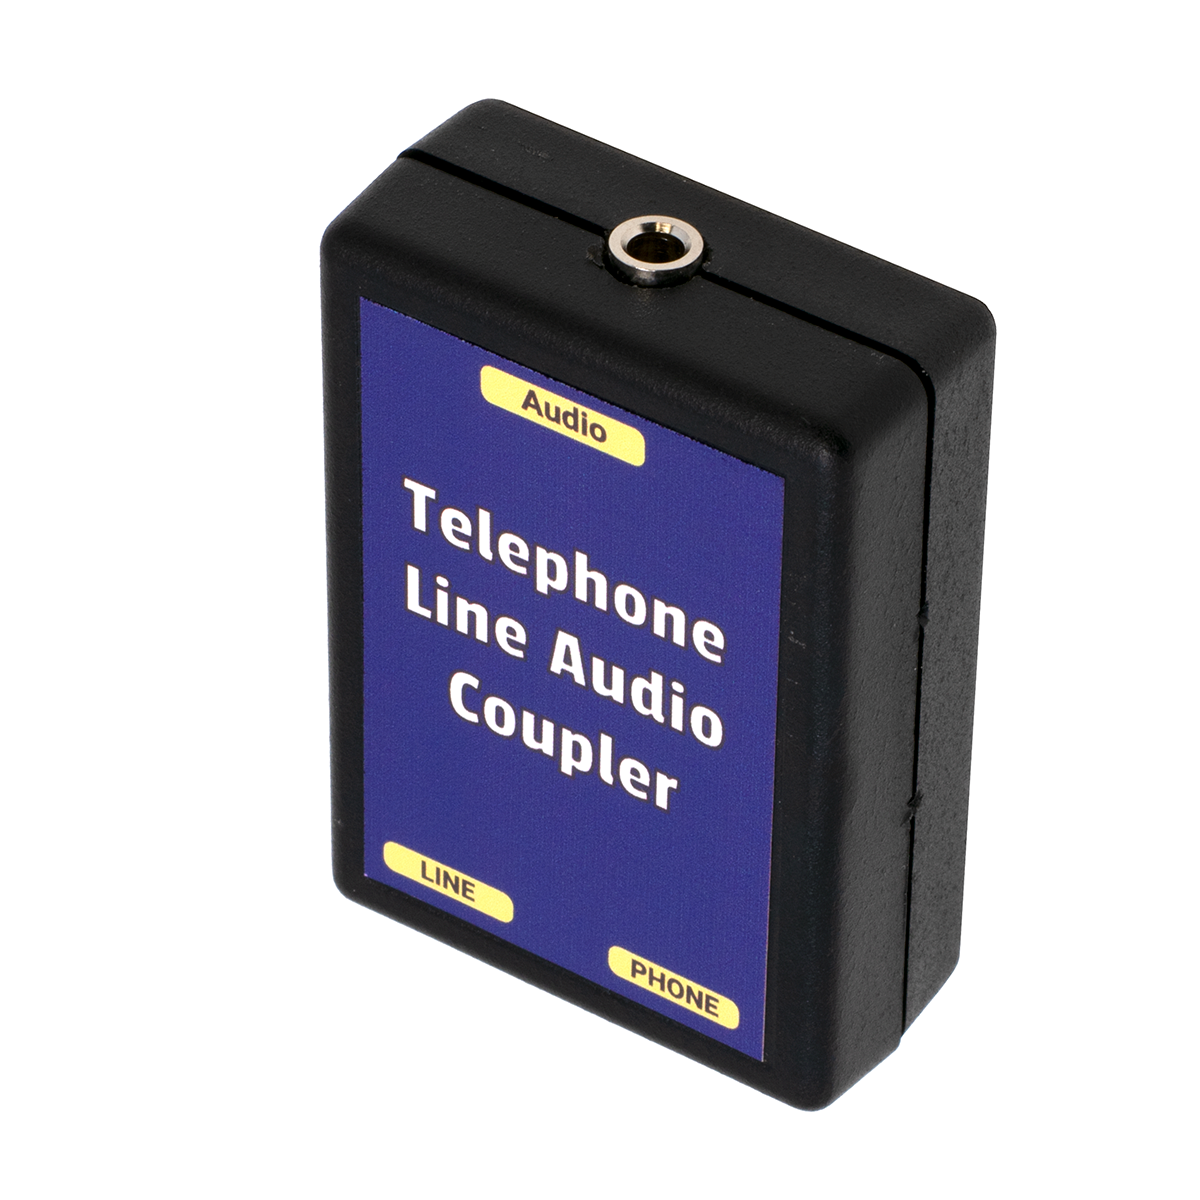 Phone Line Audio Coupler (3.5mm Jack View)